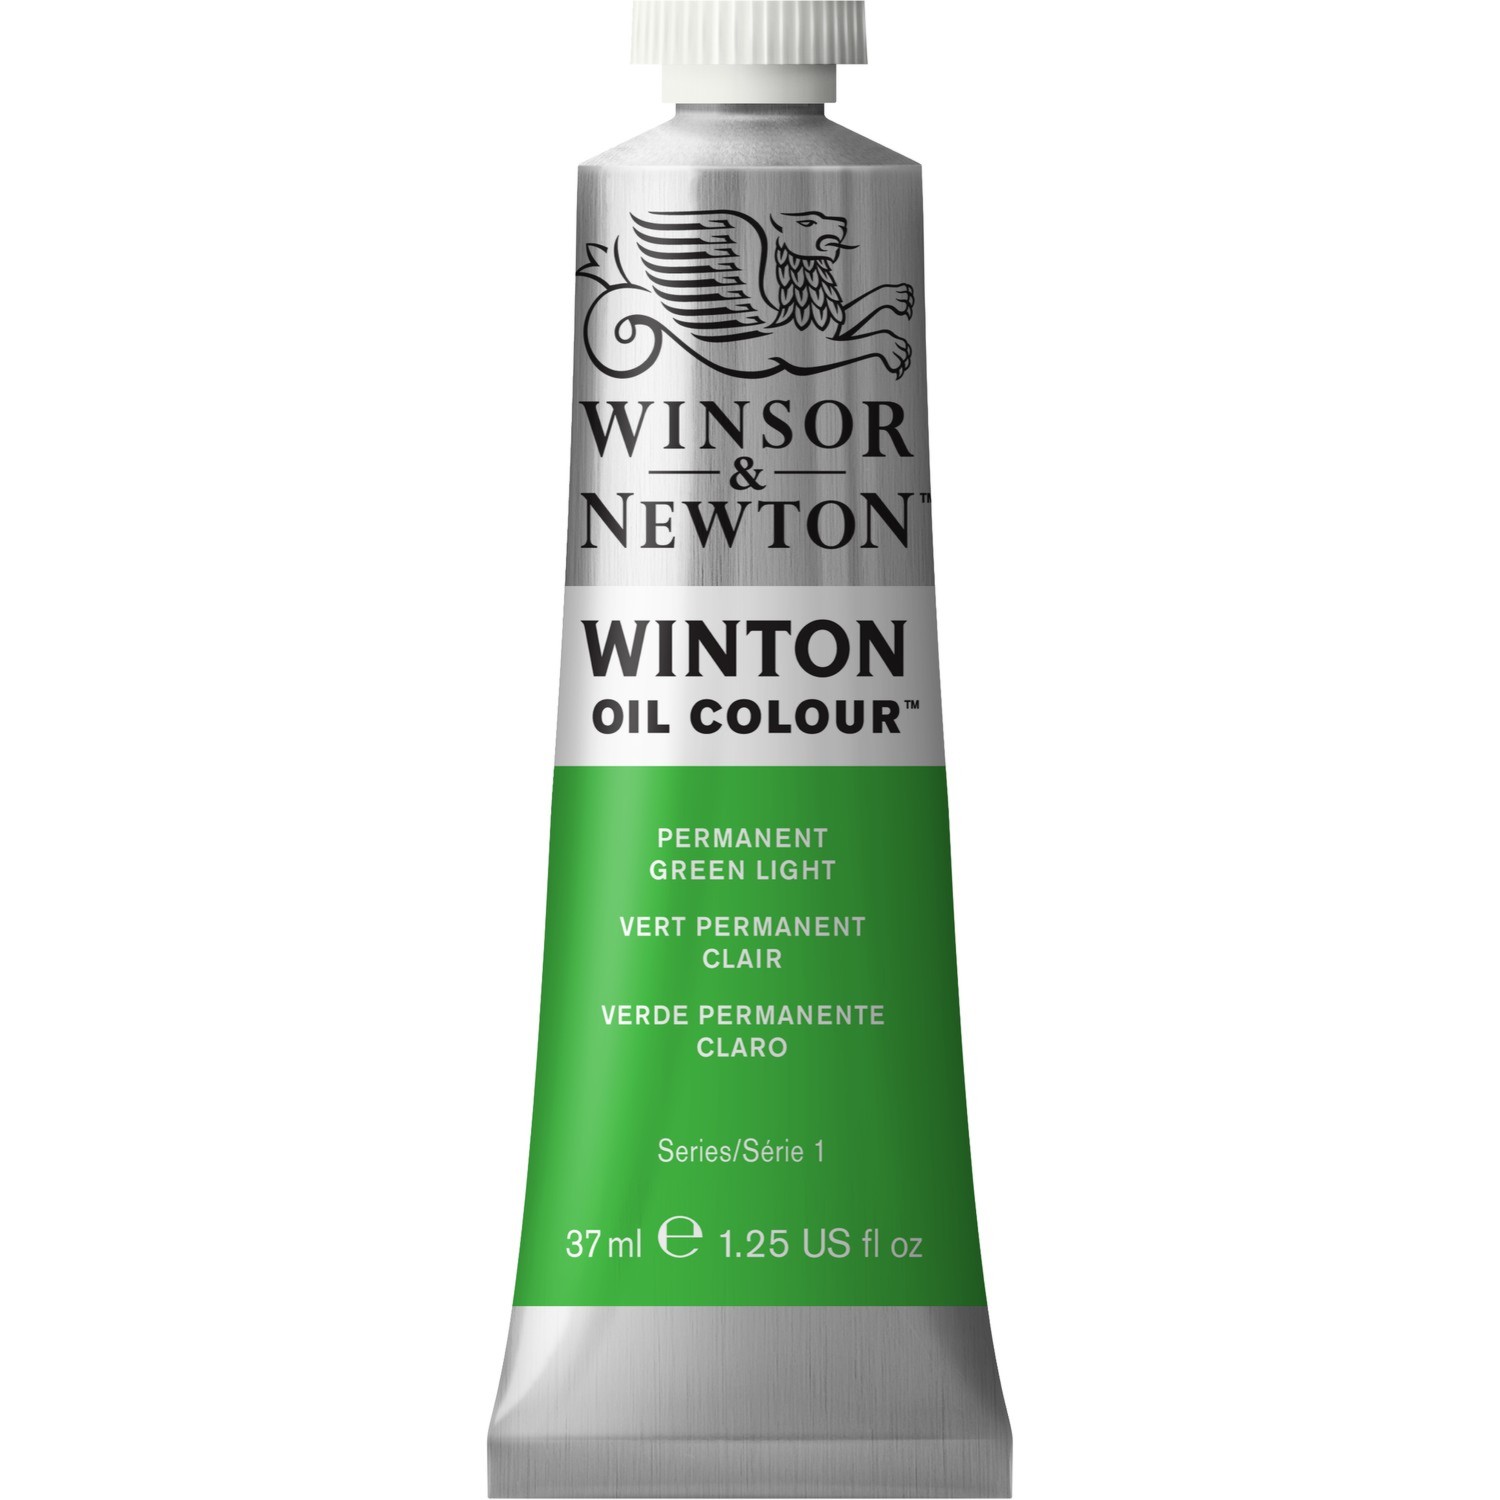 Winsor and Newton 37ml Winton Oil Colours - Perm green light Image 1